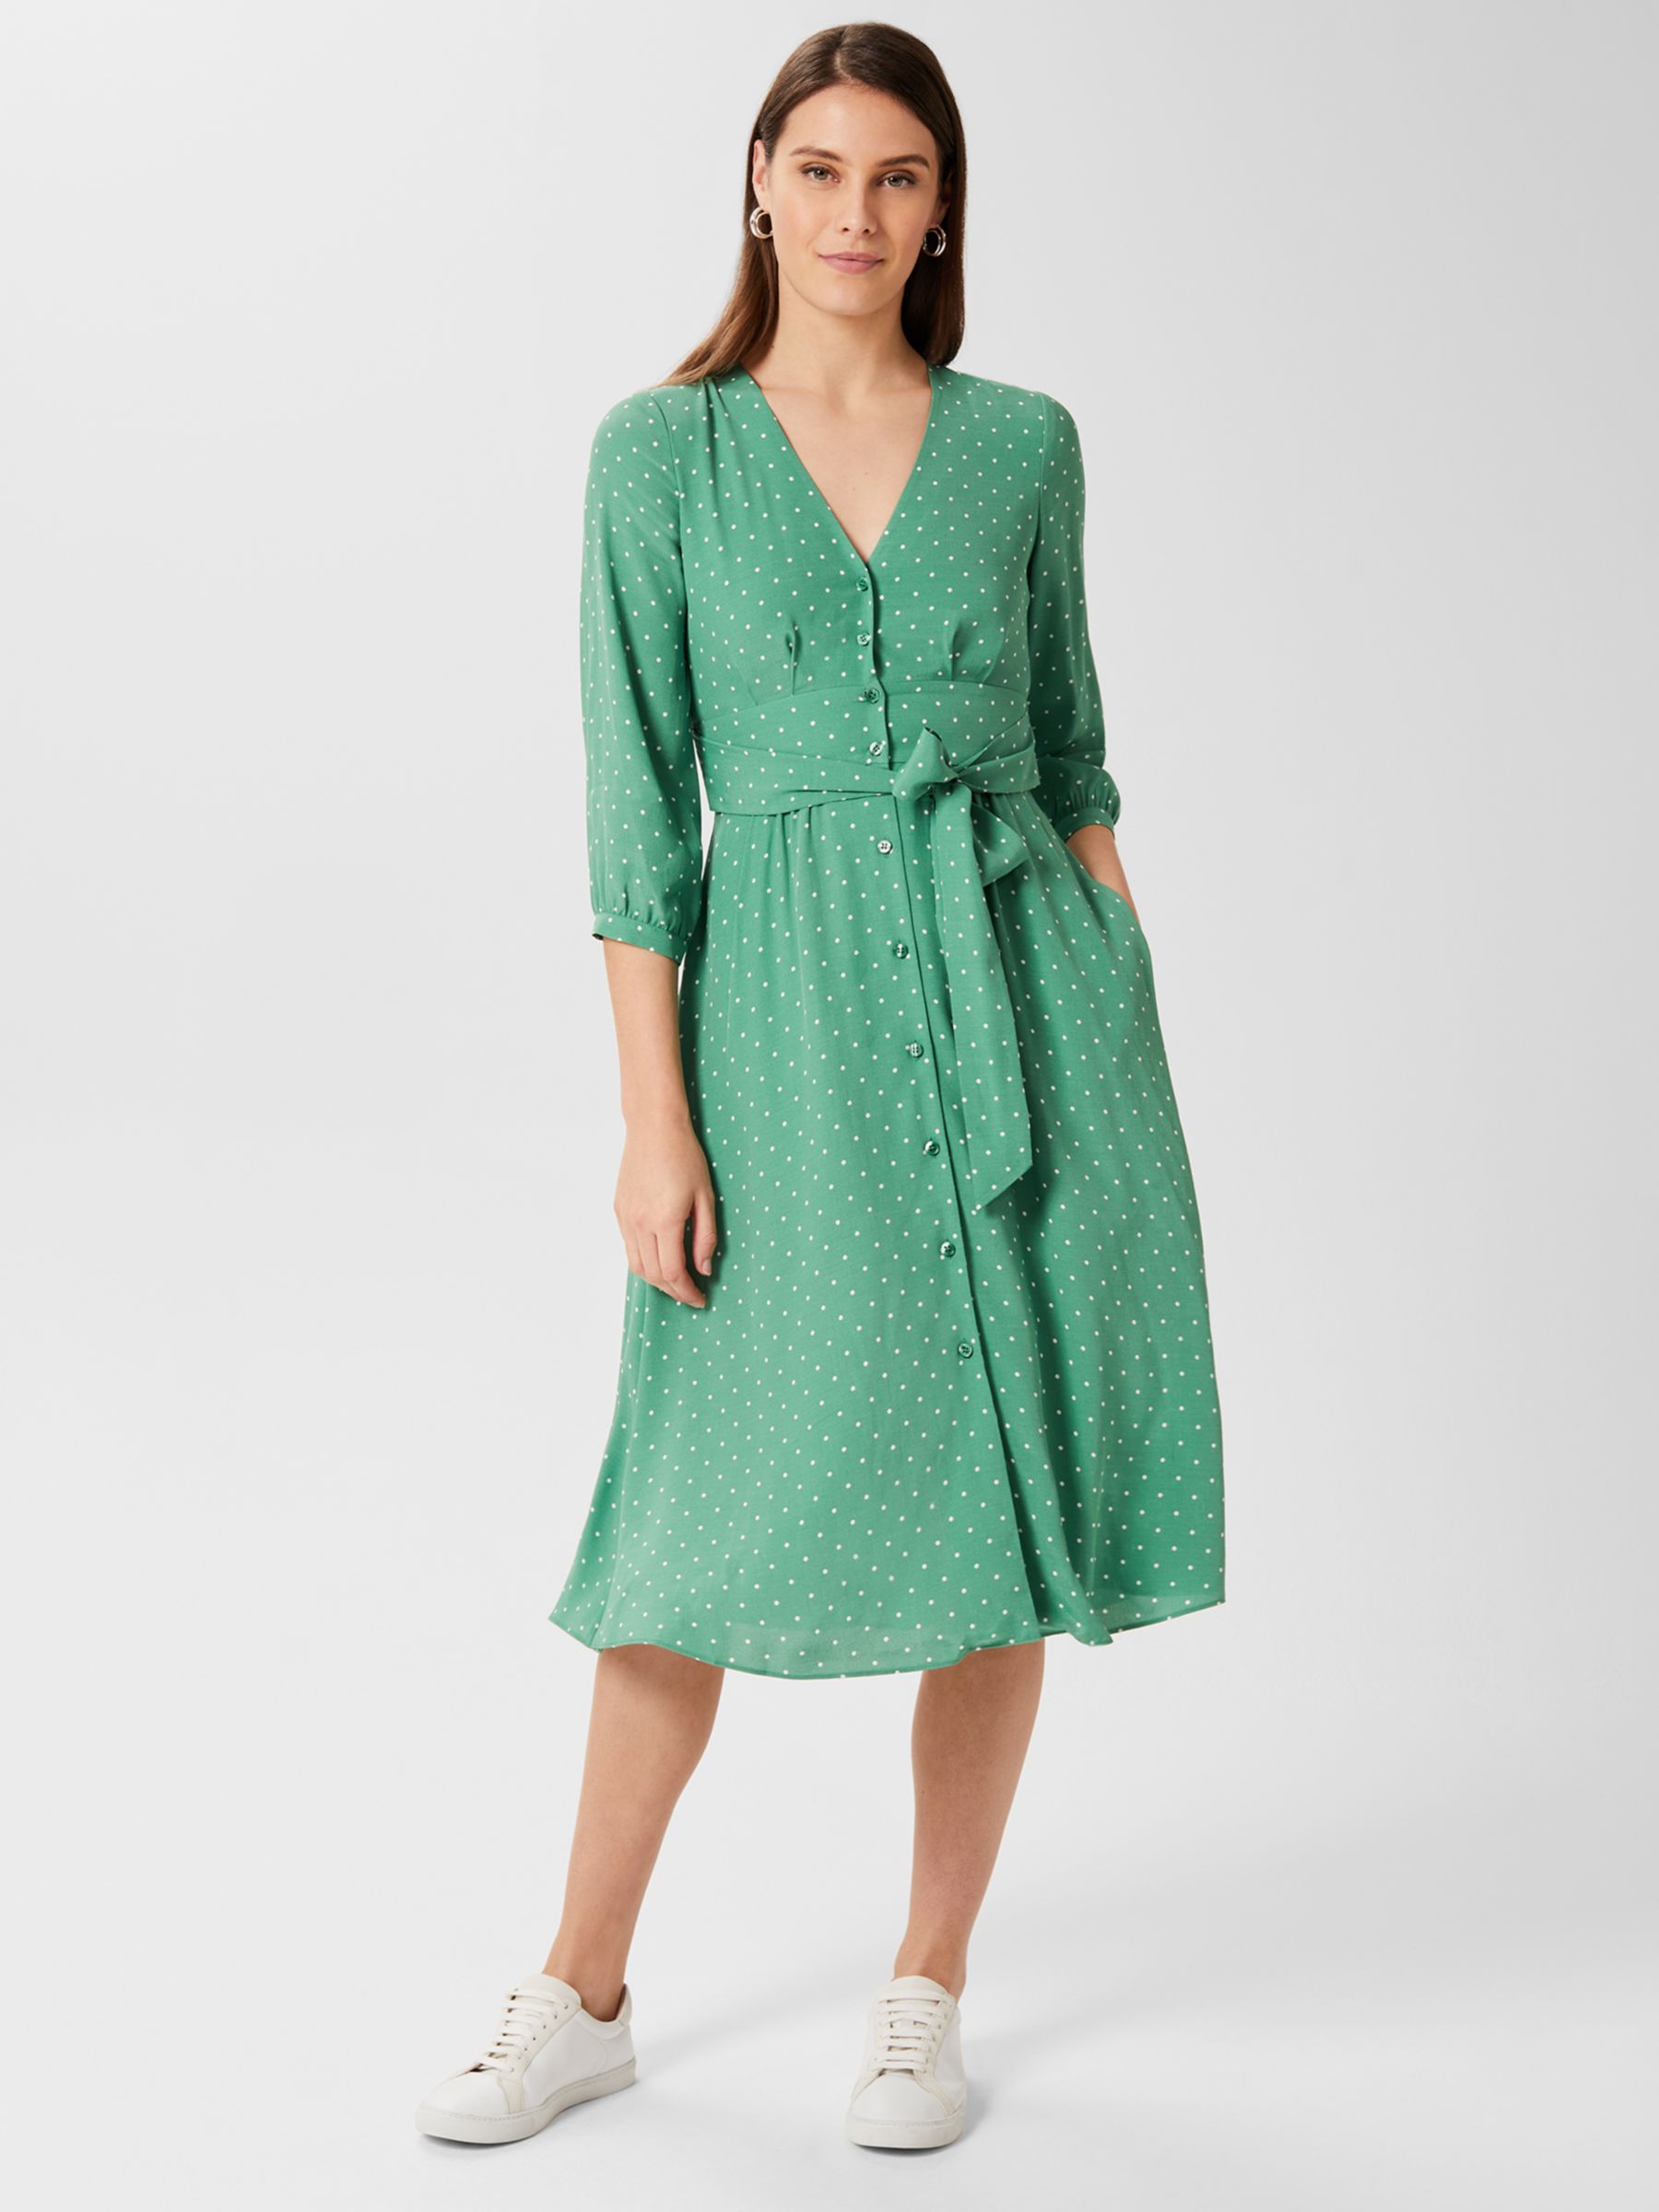 Hobbs Magnolia Polka Dot Midi Dress, Green/Ivory at John Lewis & Partners